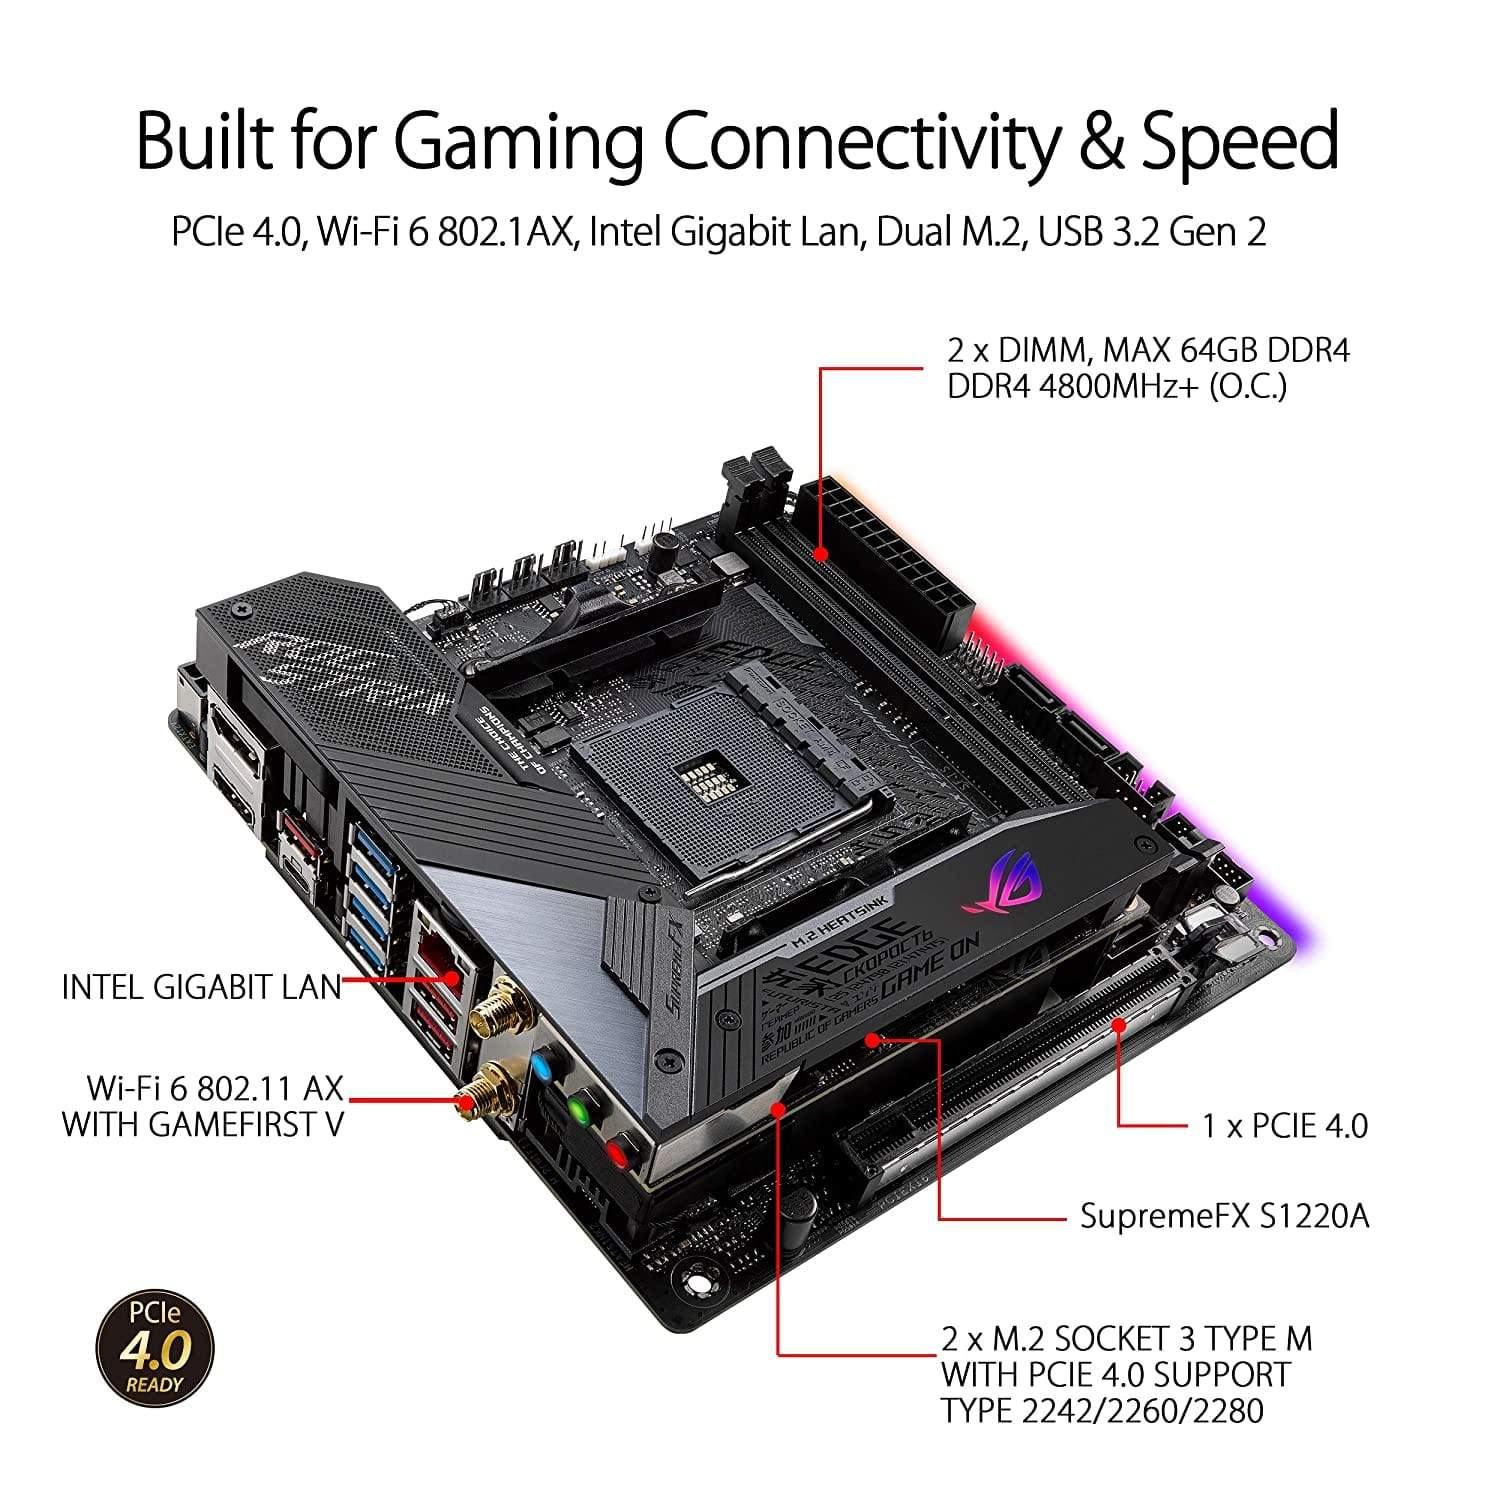 ASUS ROG Strix X570-I Gaming, X570 mini-ITX Gaming motherboard-Mother Boards-dealsplant